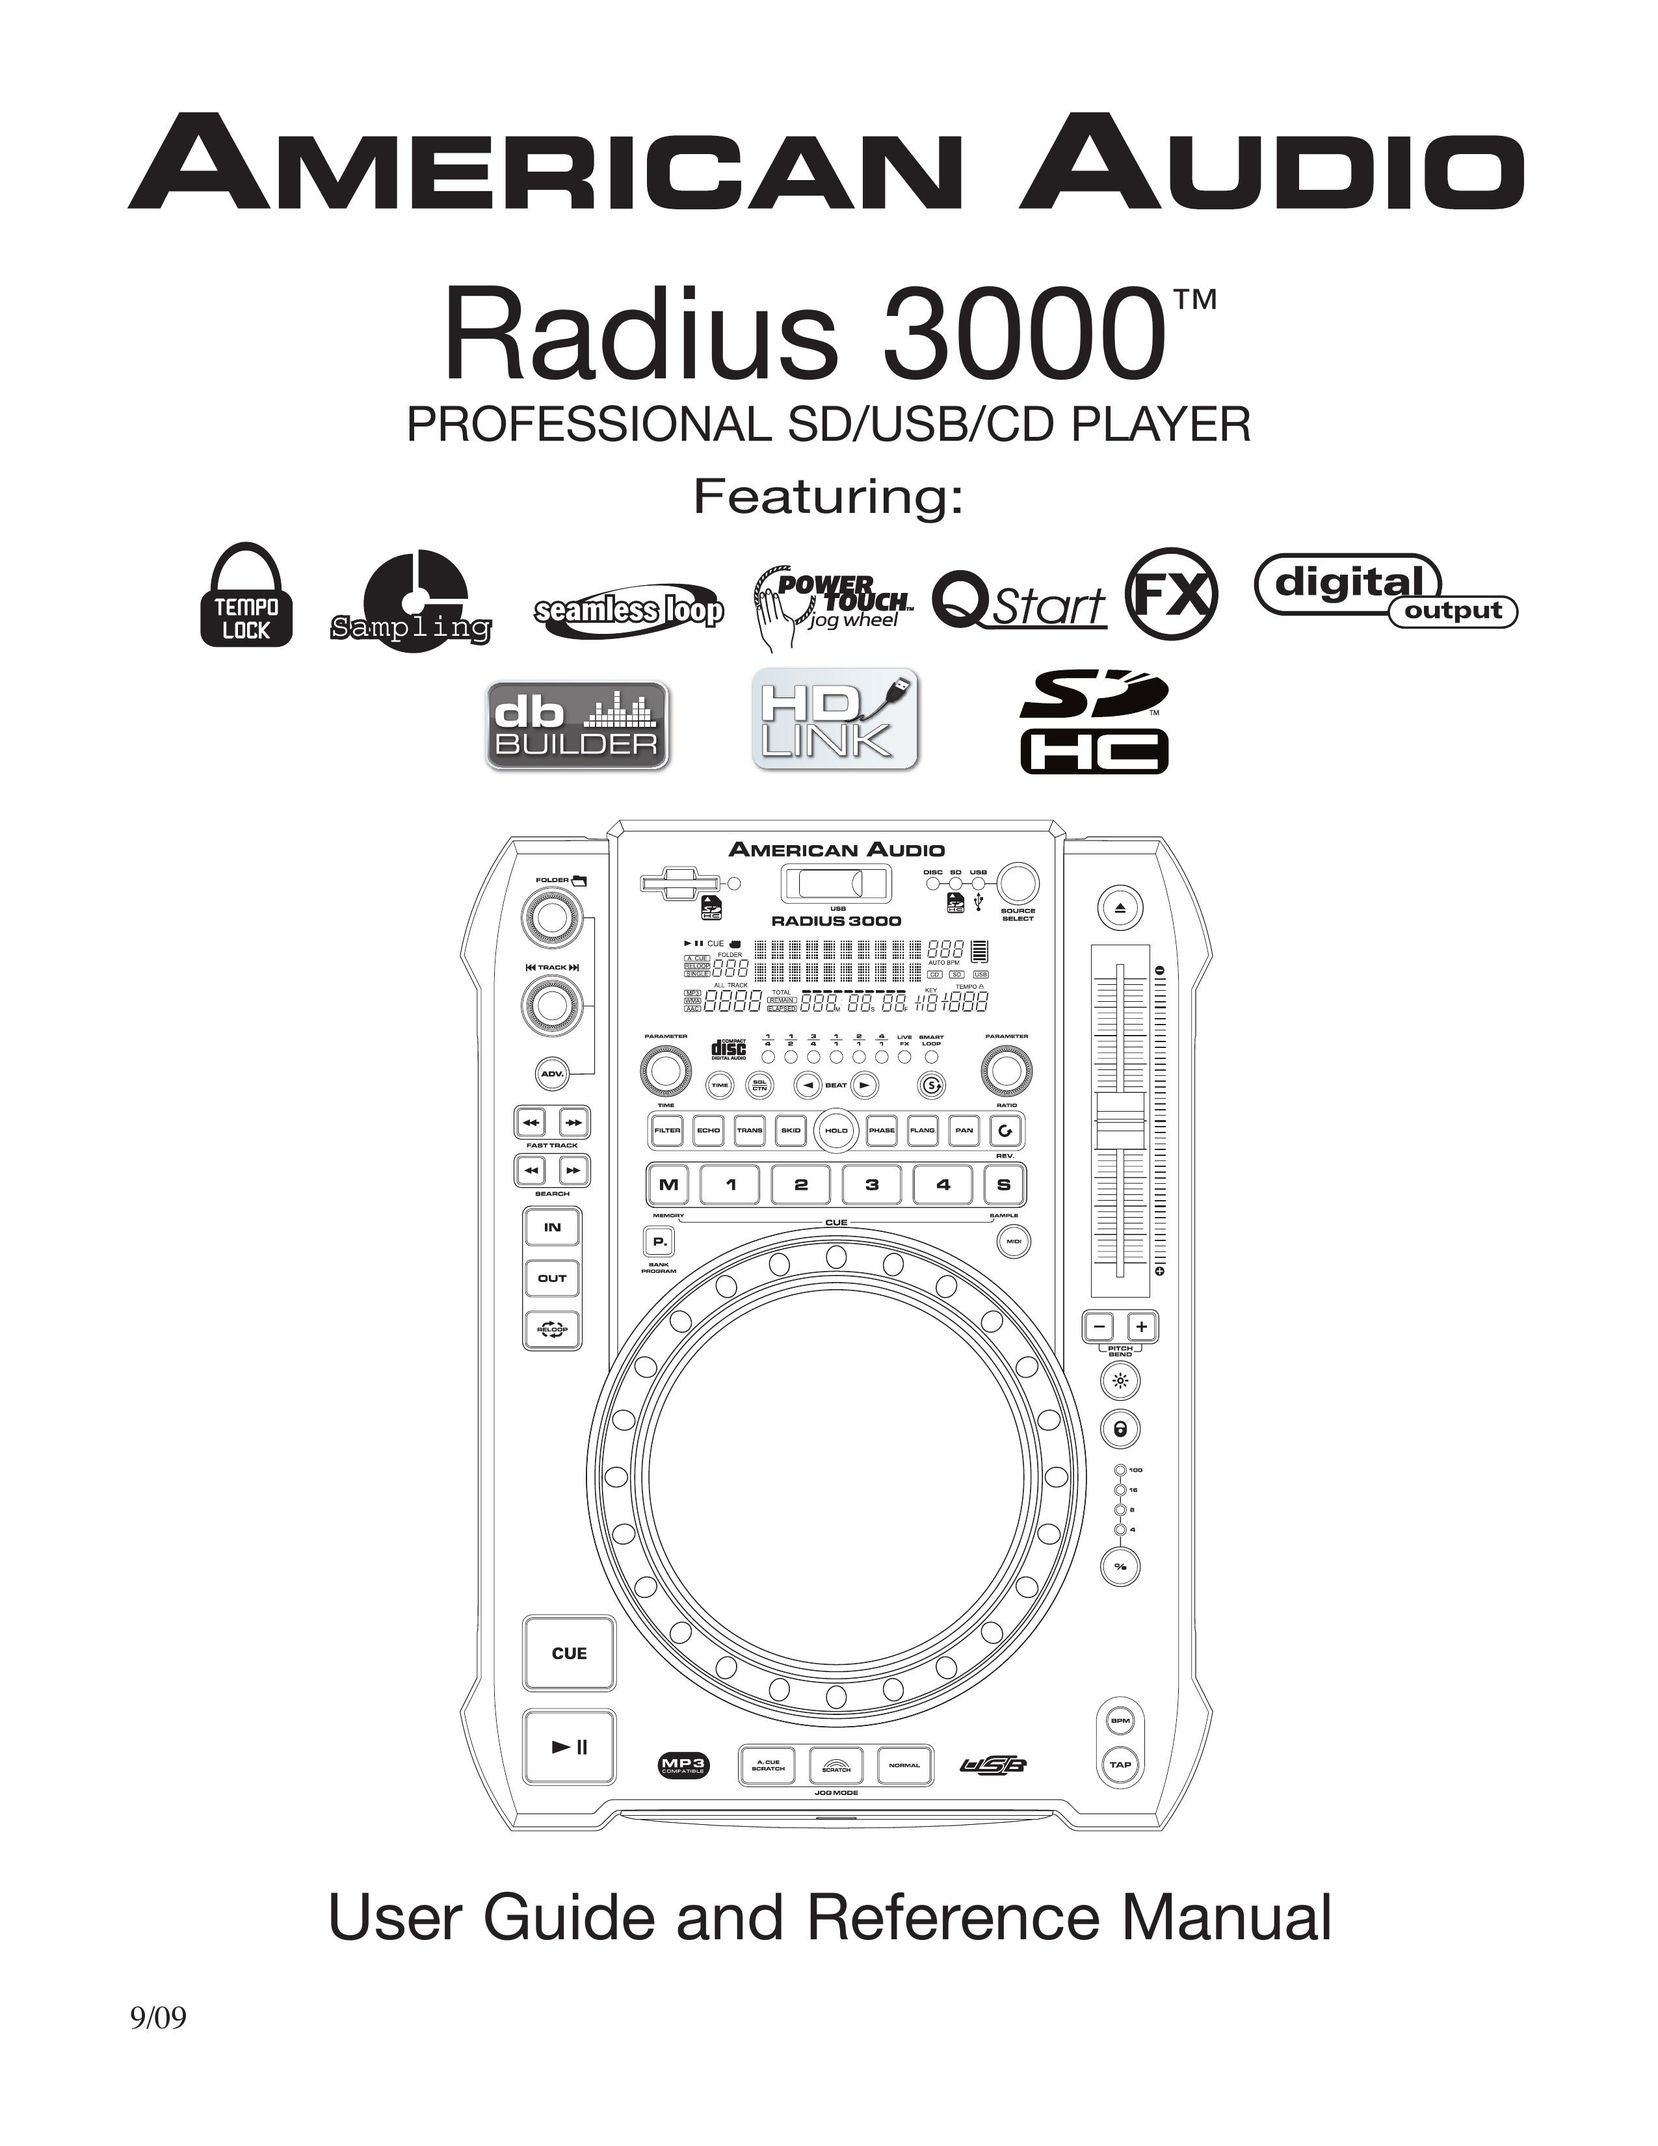 American Audio Radius 3000 CD Player User Manual (Page 1)